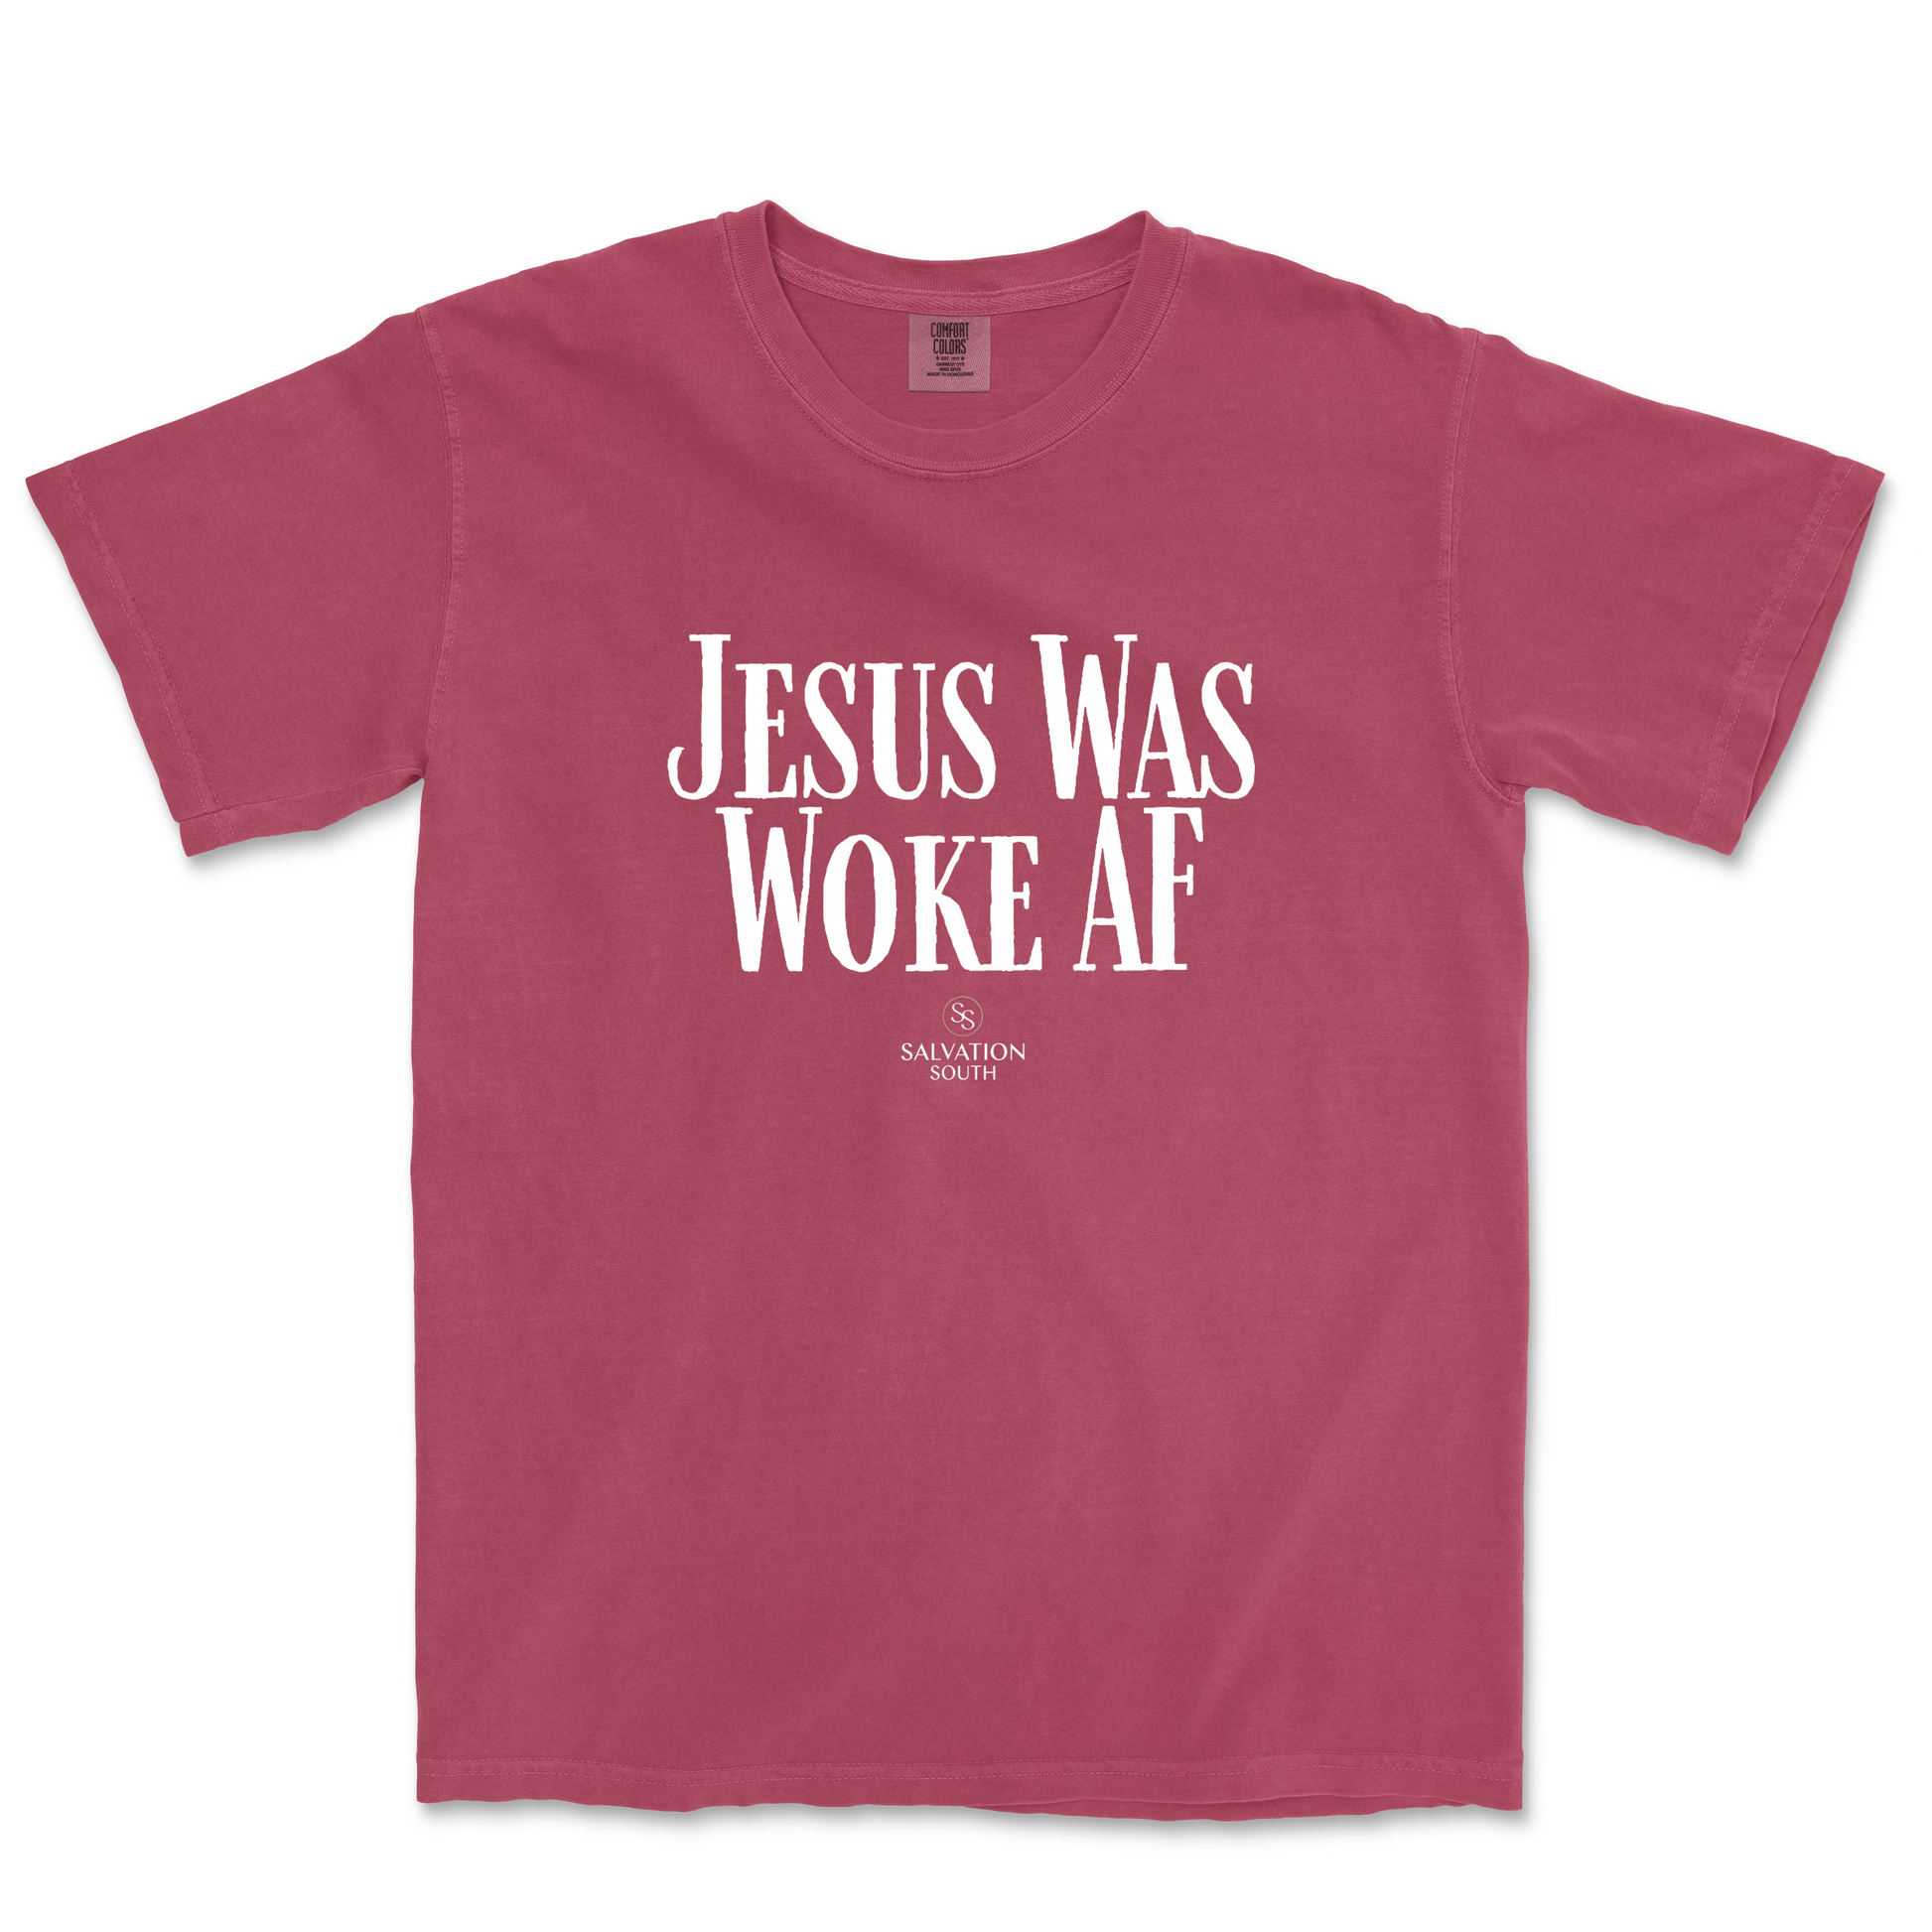 salvation south tshirt jesus was woke as fuck AF 